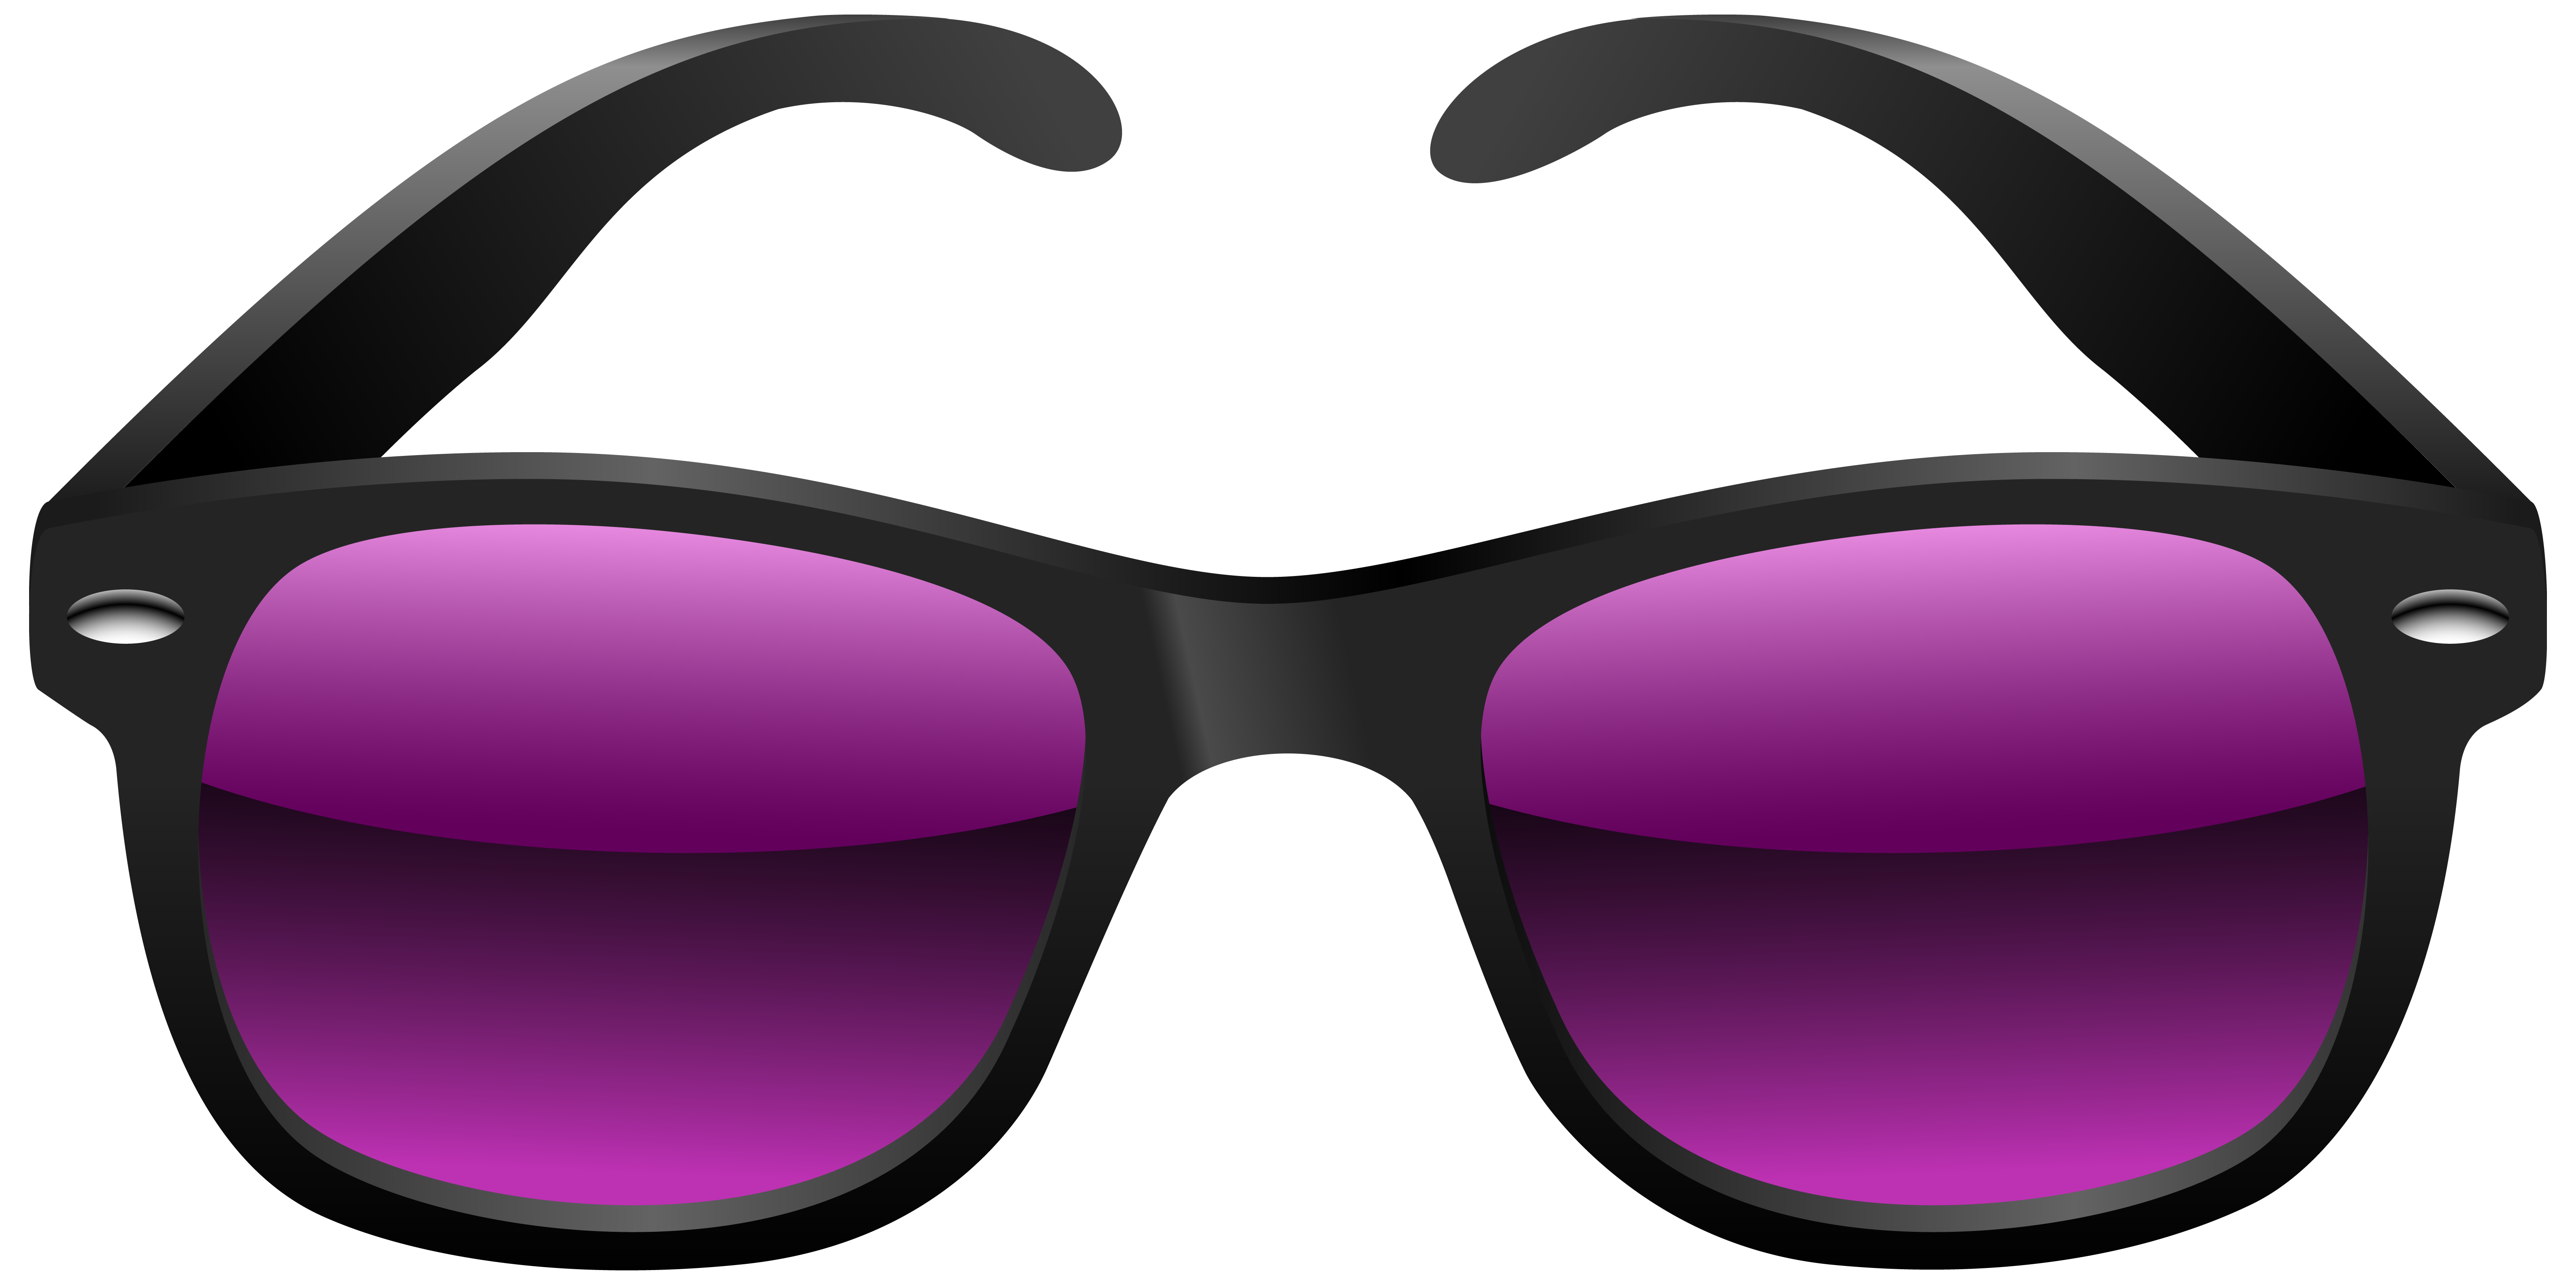 Goggles clipart x2 nokia. Black and purple sunglasses